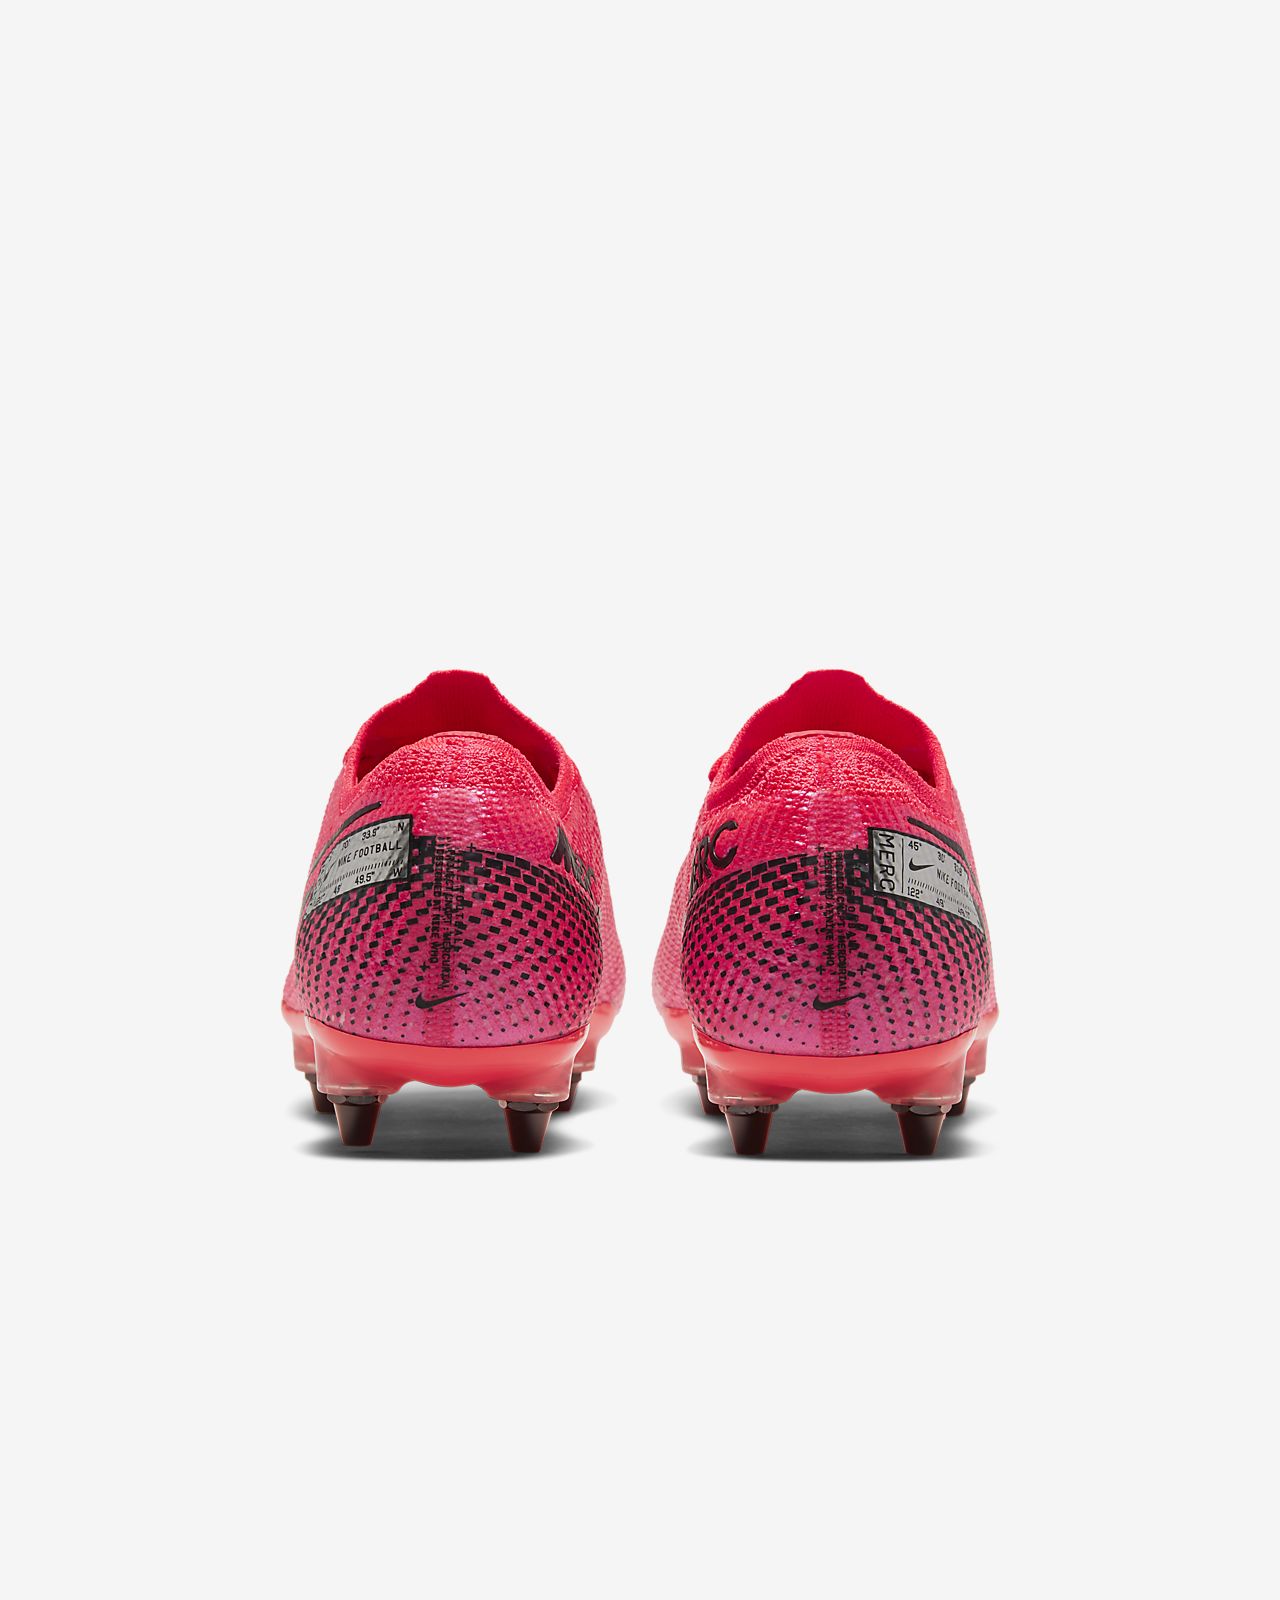 Nike Mercurial Vapor 13 Review Soccer Cleats 101